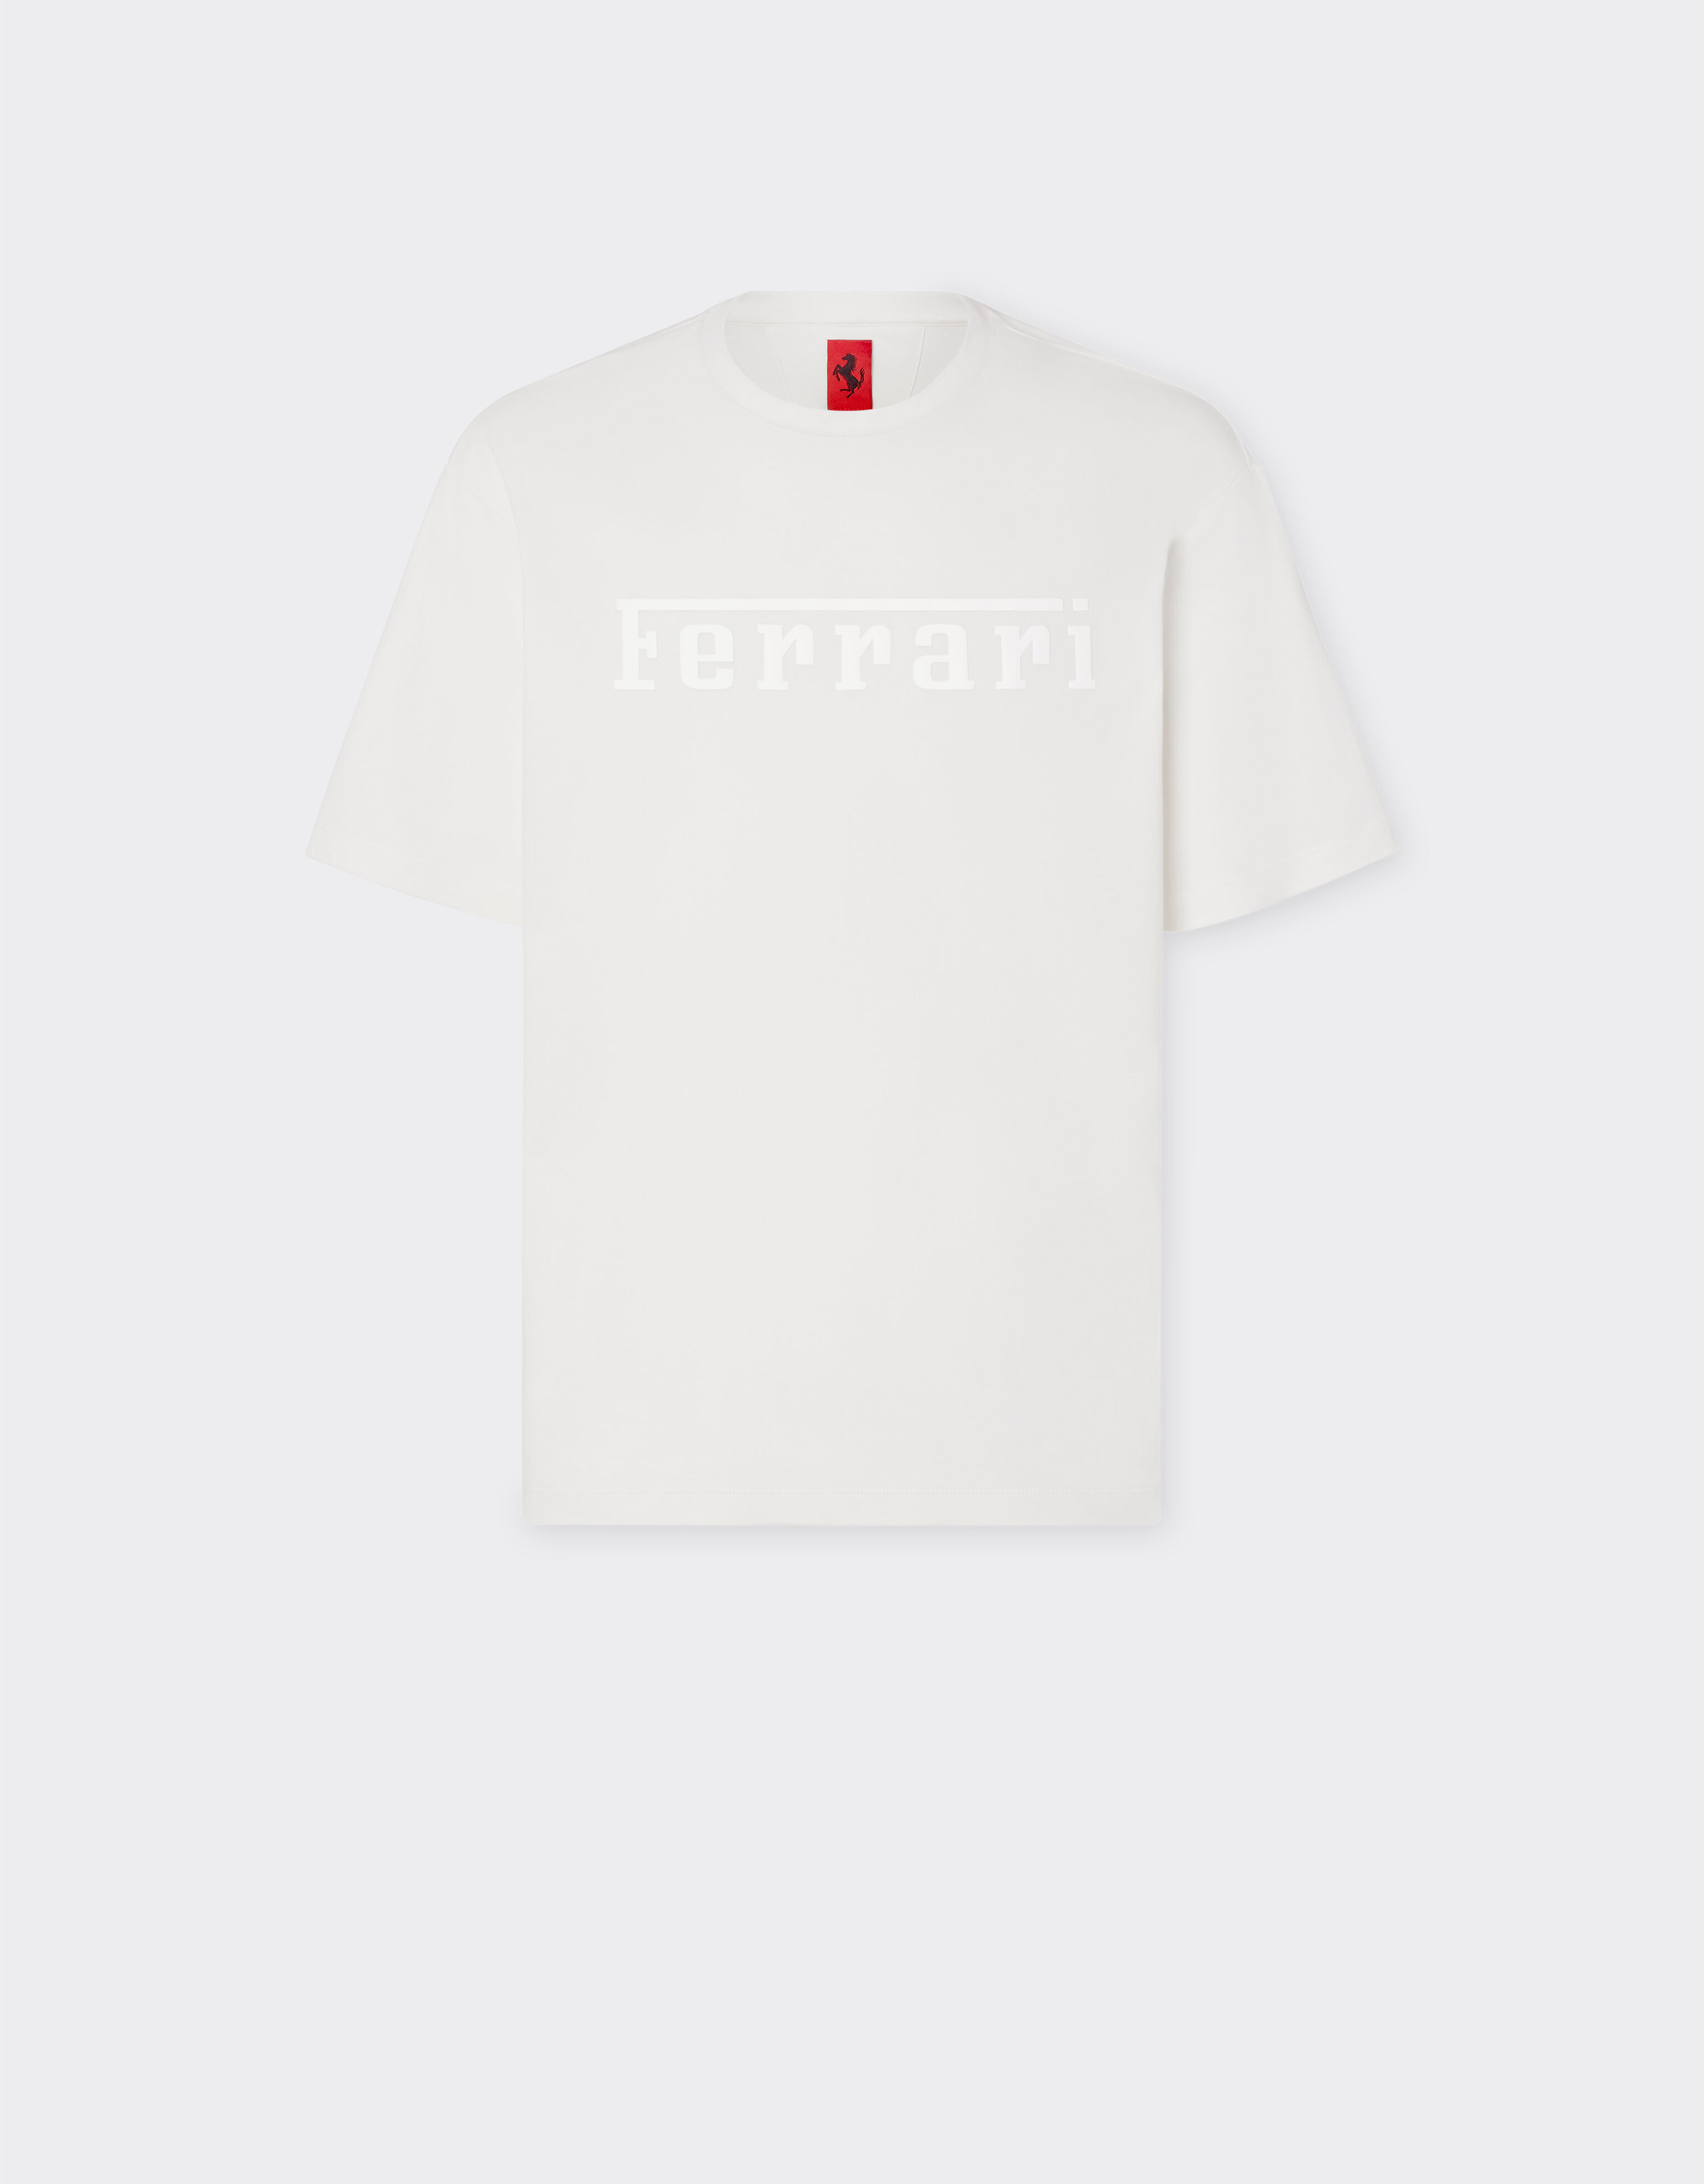 Ferrari Cotton T-shirt with Ferrari logo Optical White 48490f